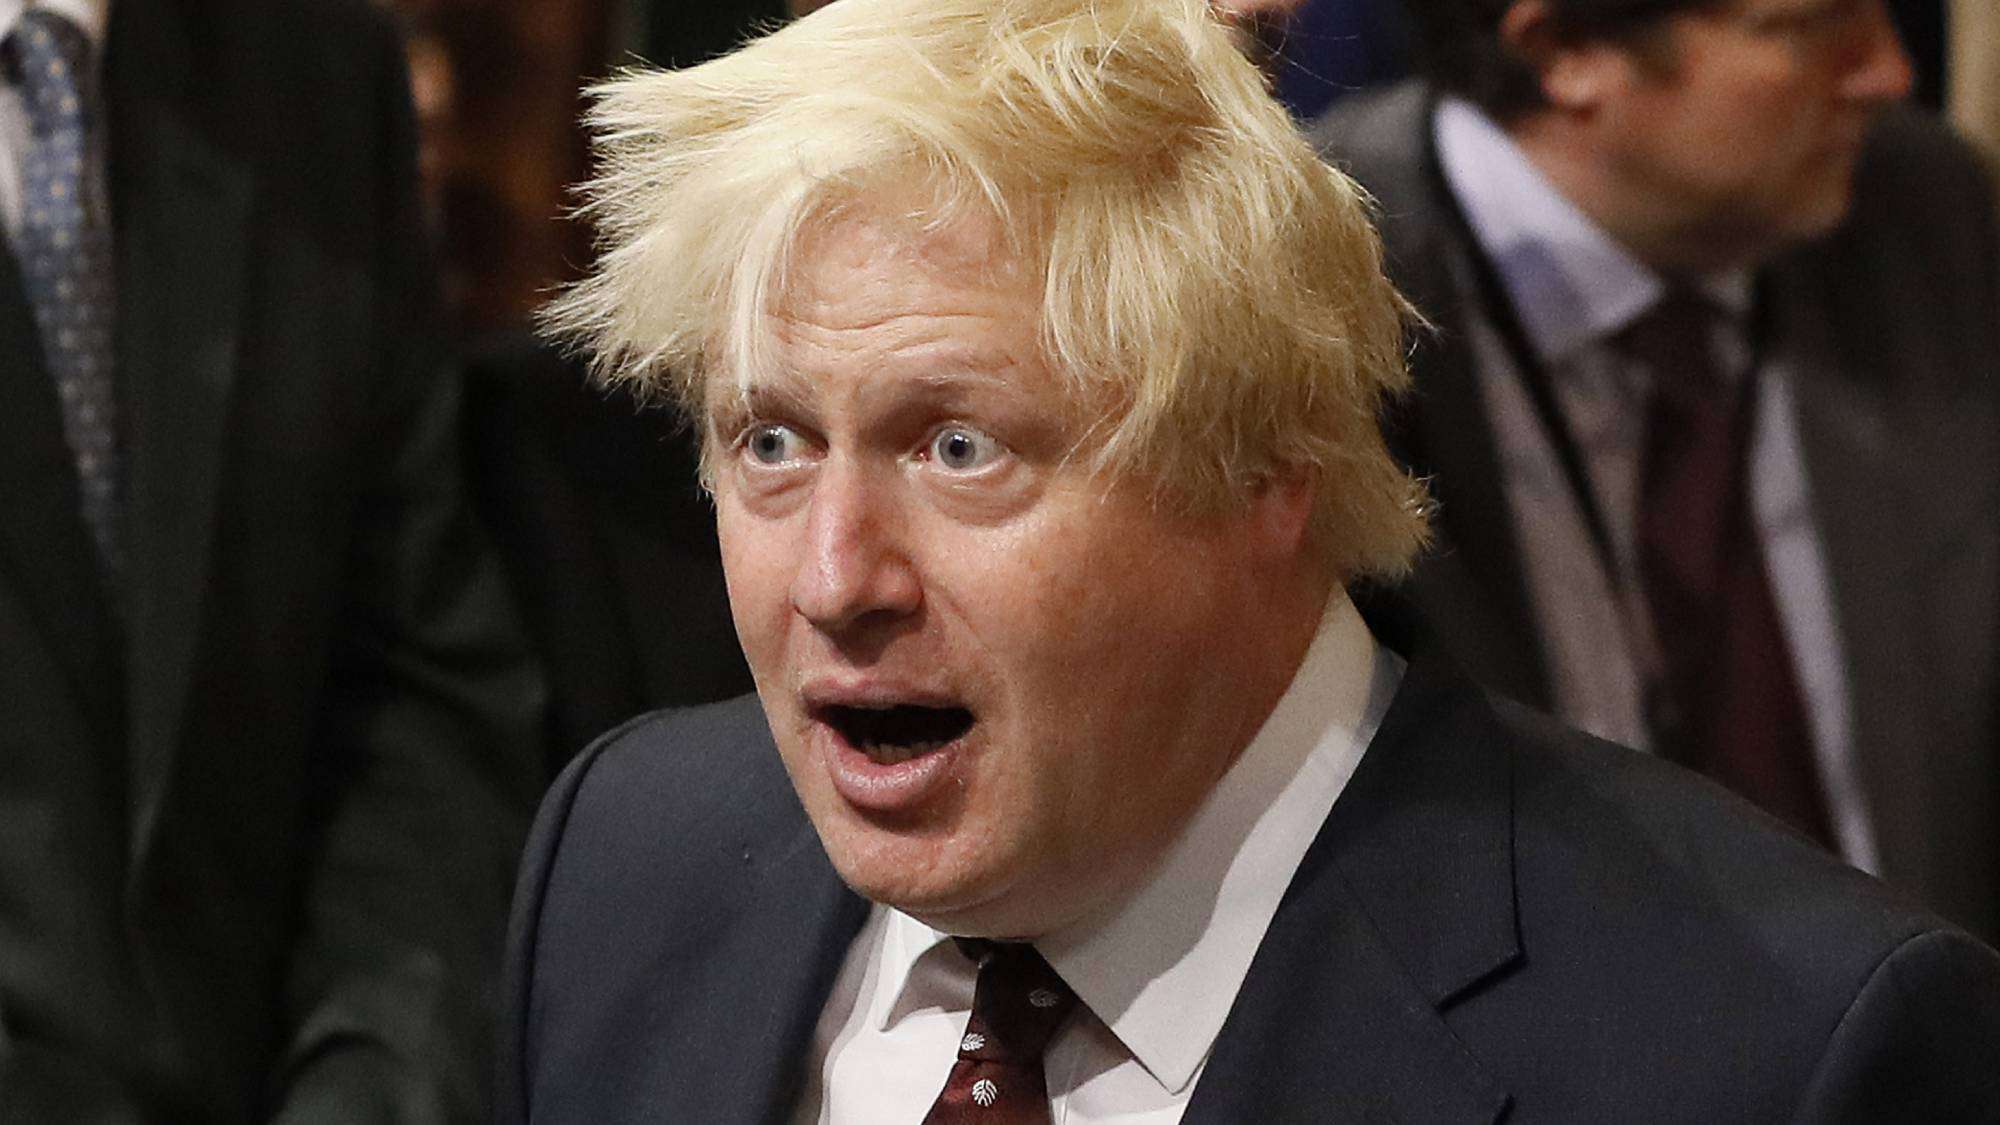 ‘He’s a coward!’ Chris Bryant attacks Boris Johnson after refusing no confidence vote